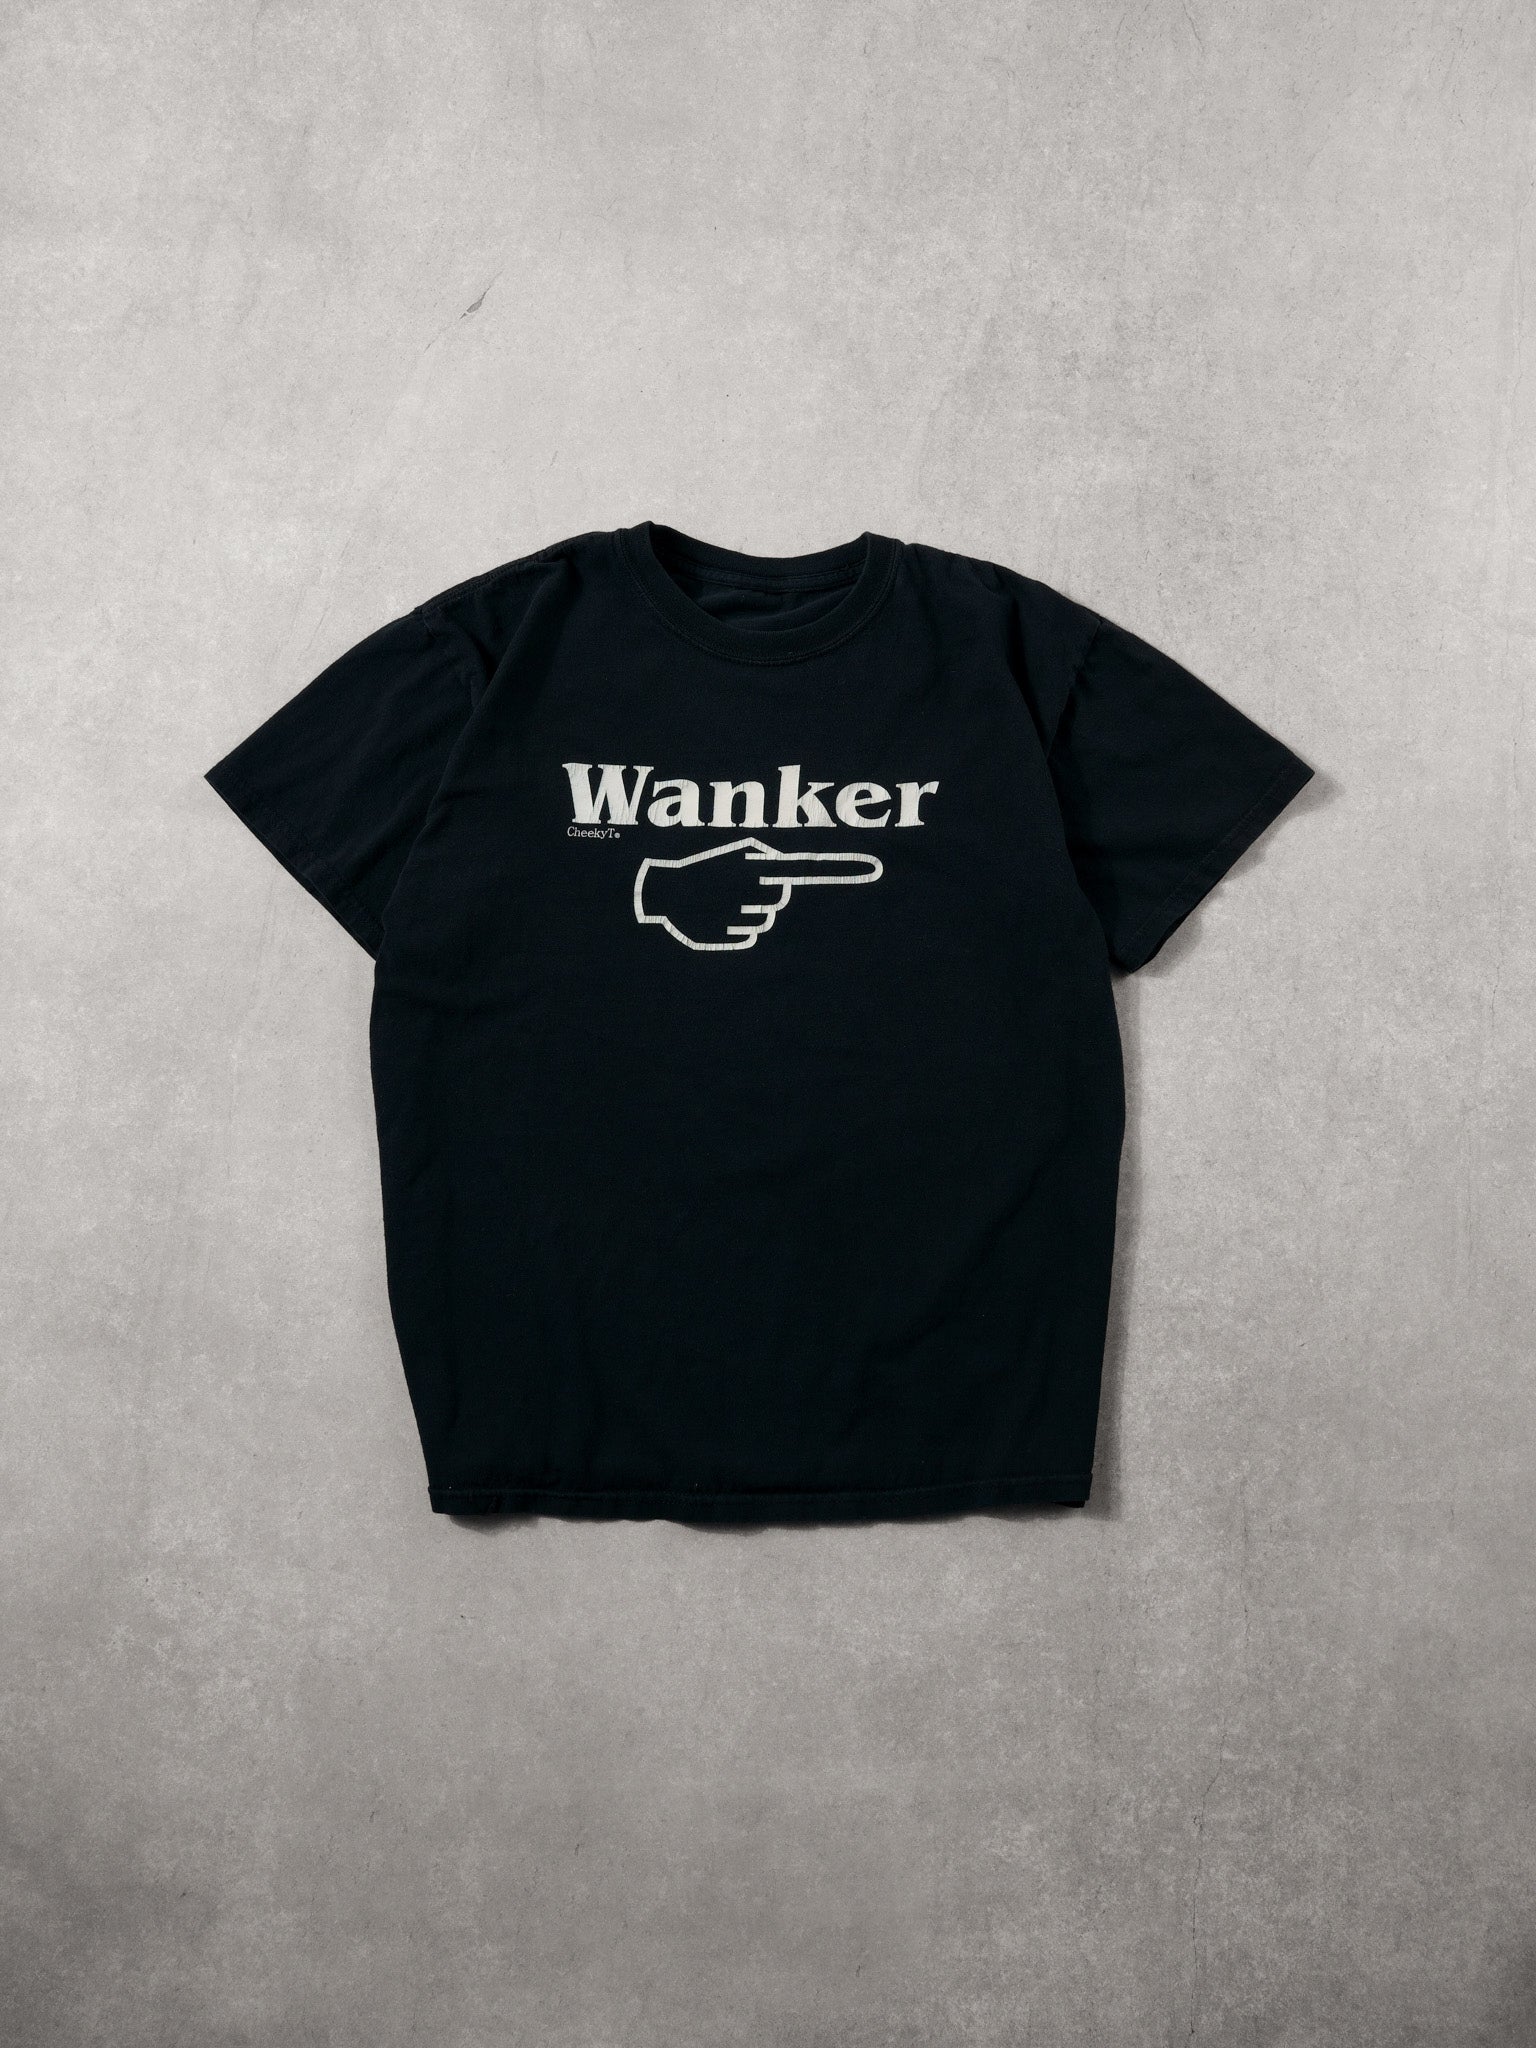 Vintage 90s Washed Black "Wanker" Graphic Tee (M)